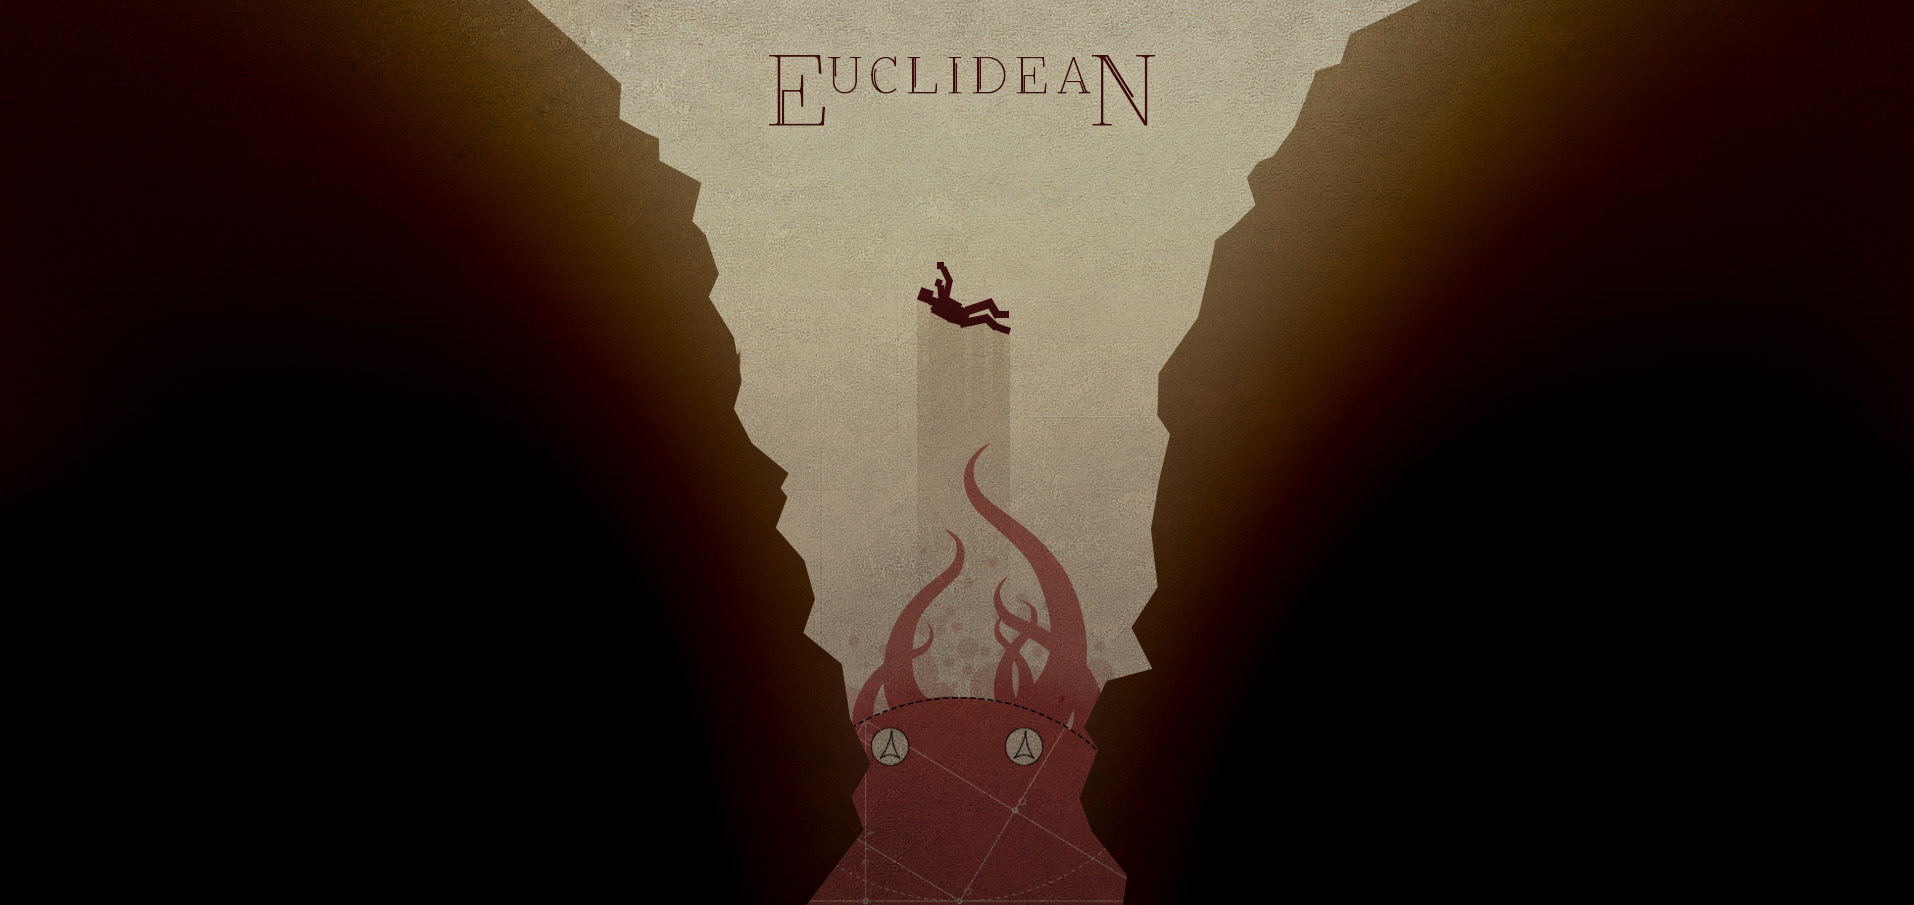 EuclideanHeaderFull